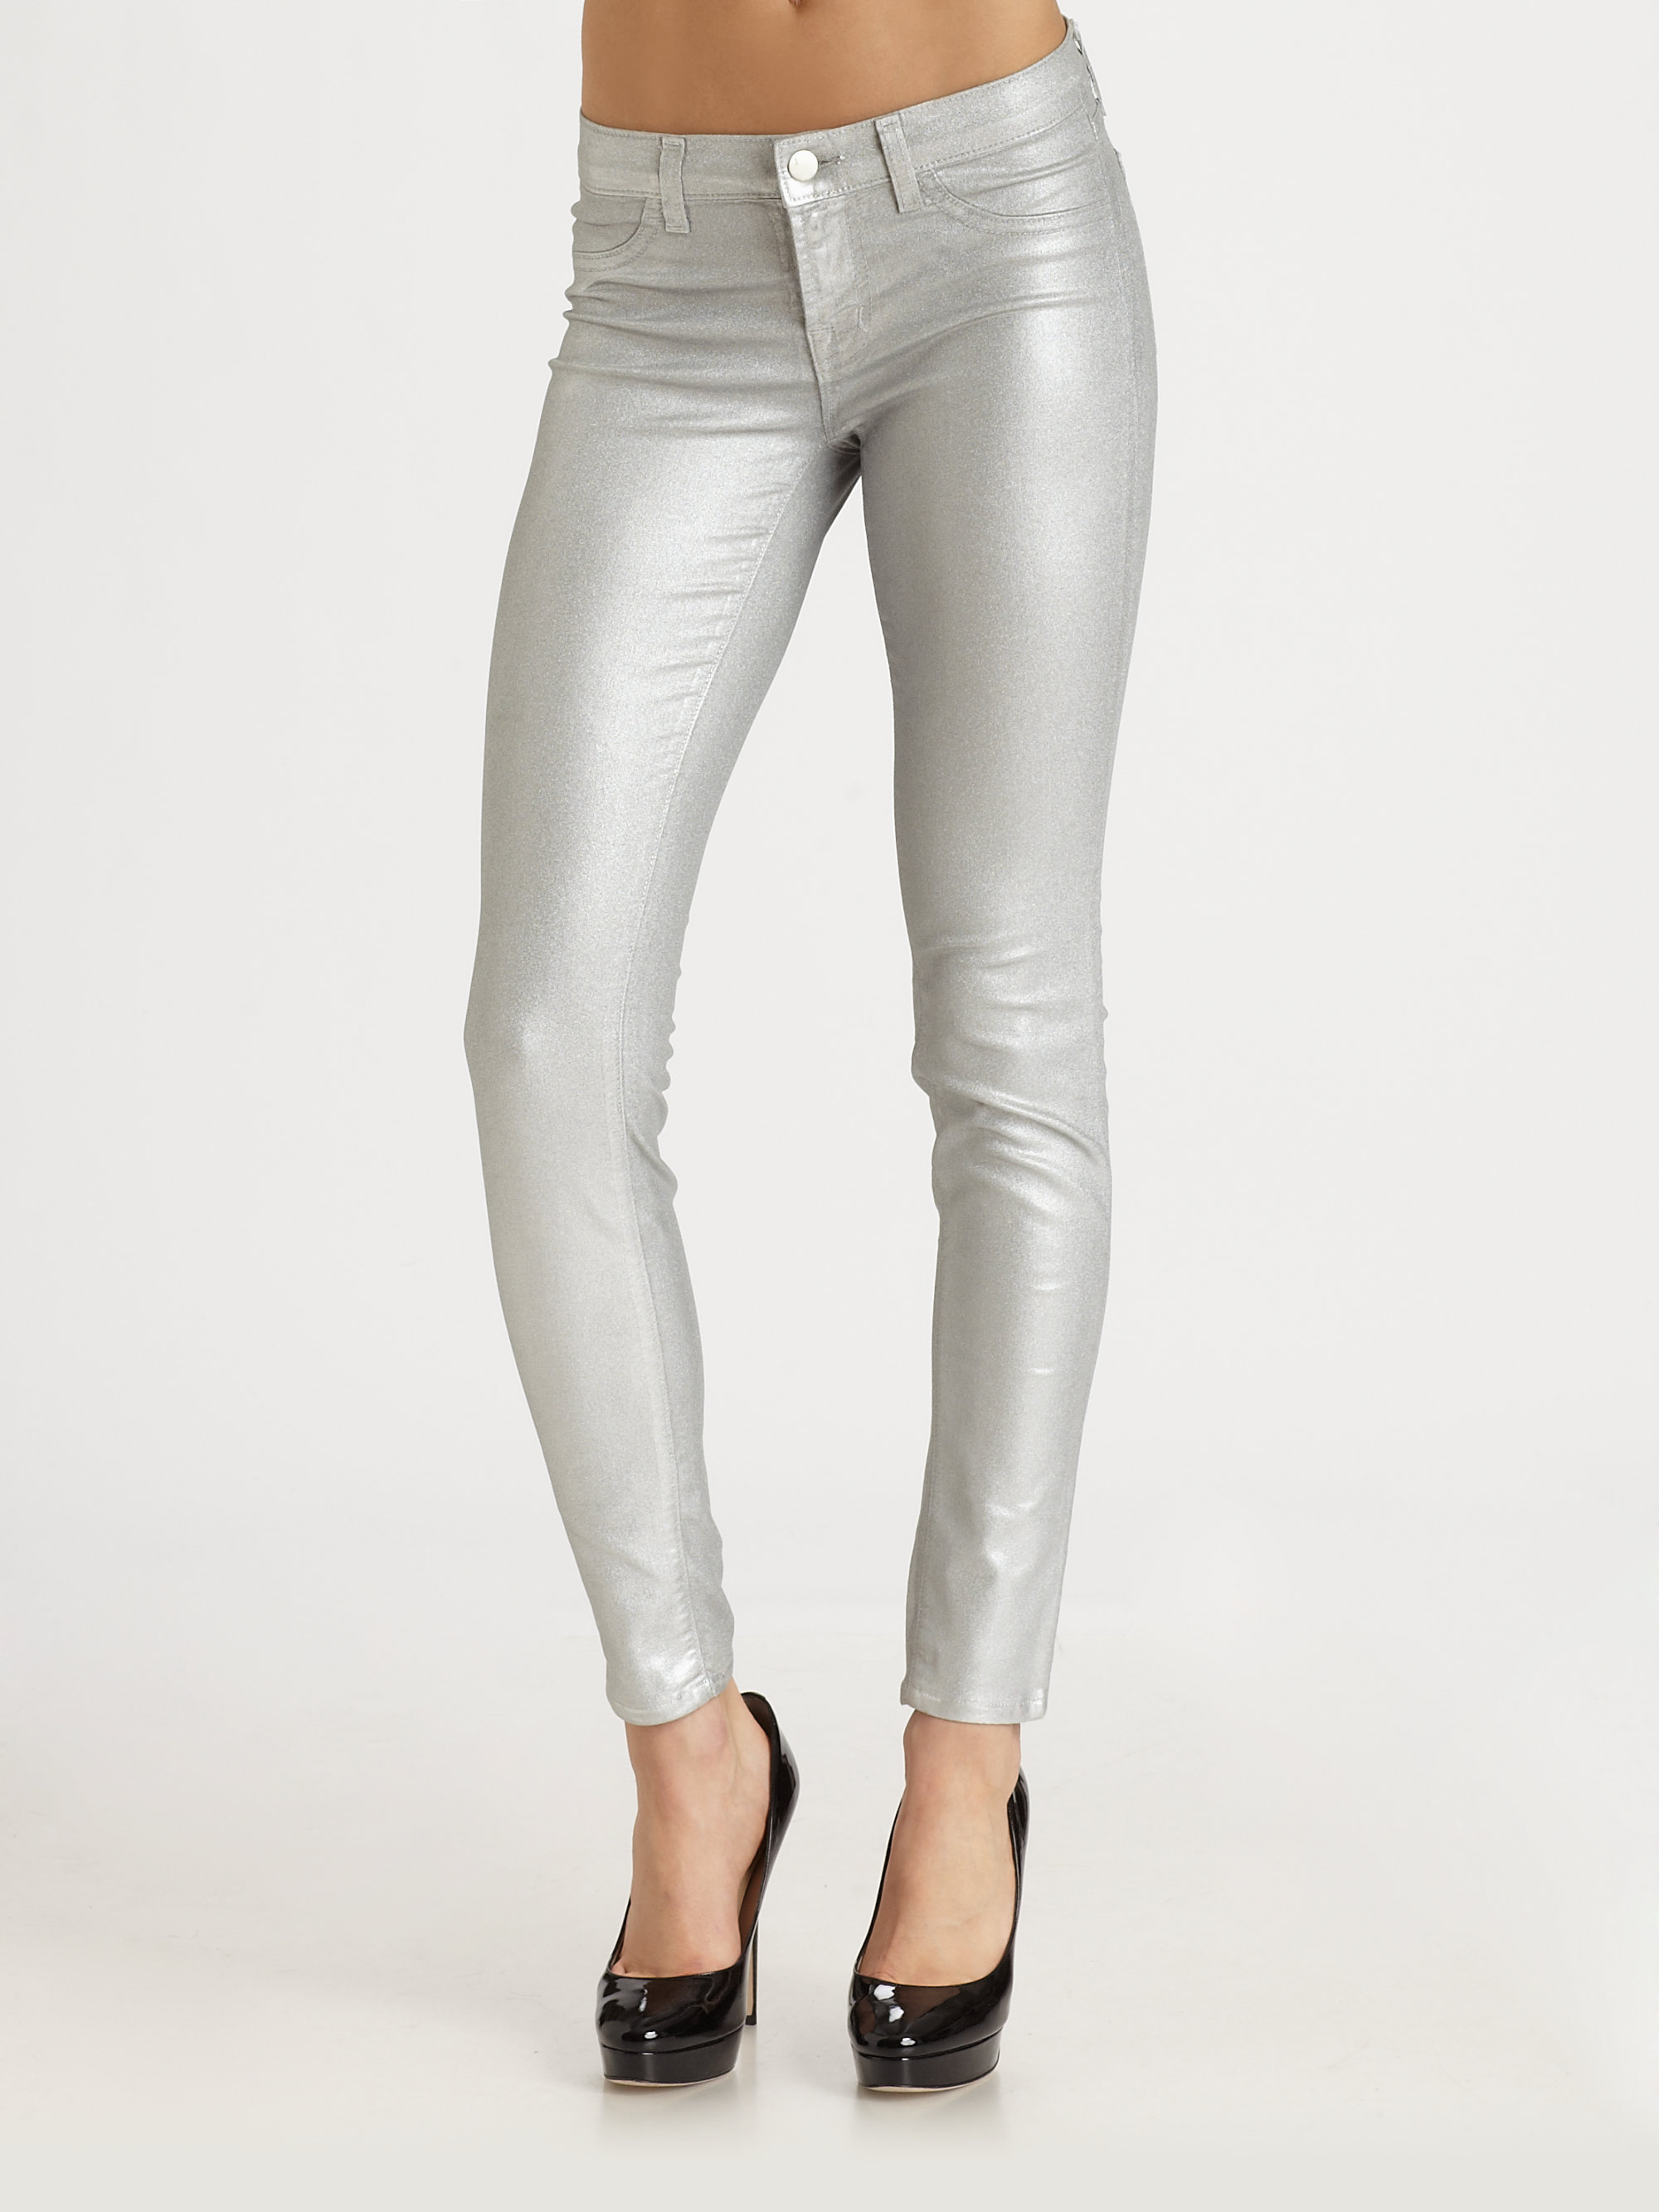 Lyst - J Brand 901 Super Skinny Coated Jeans in Metallic